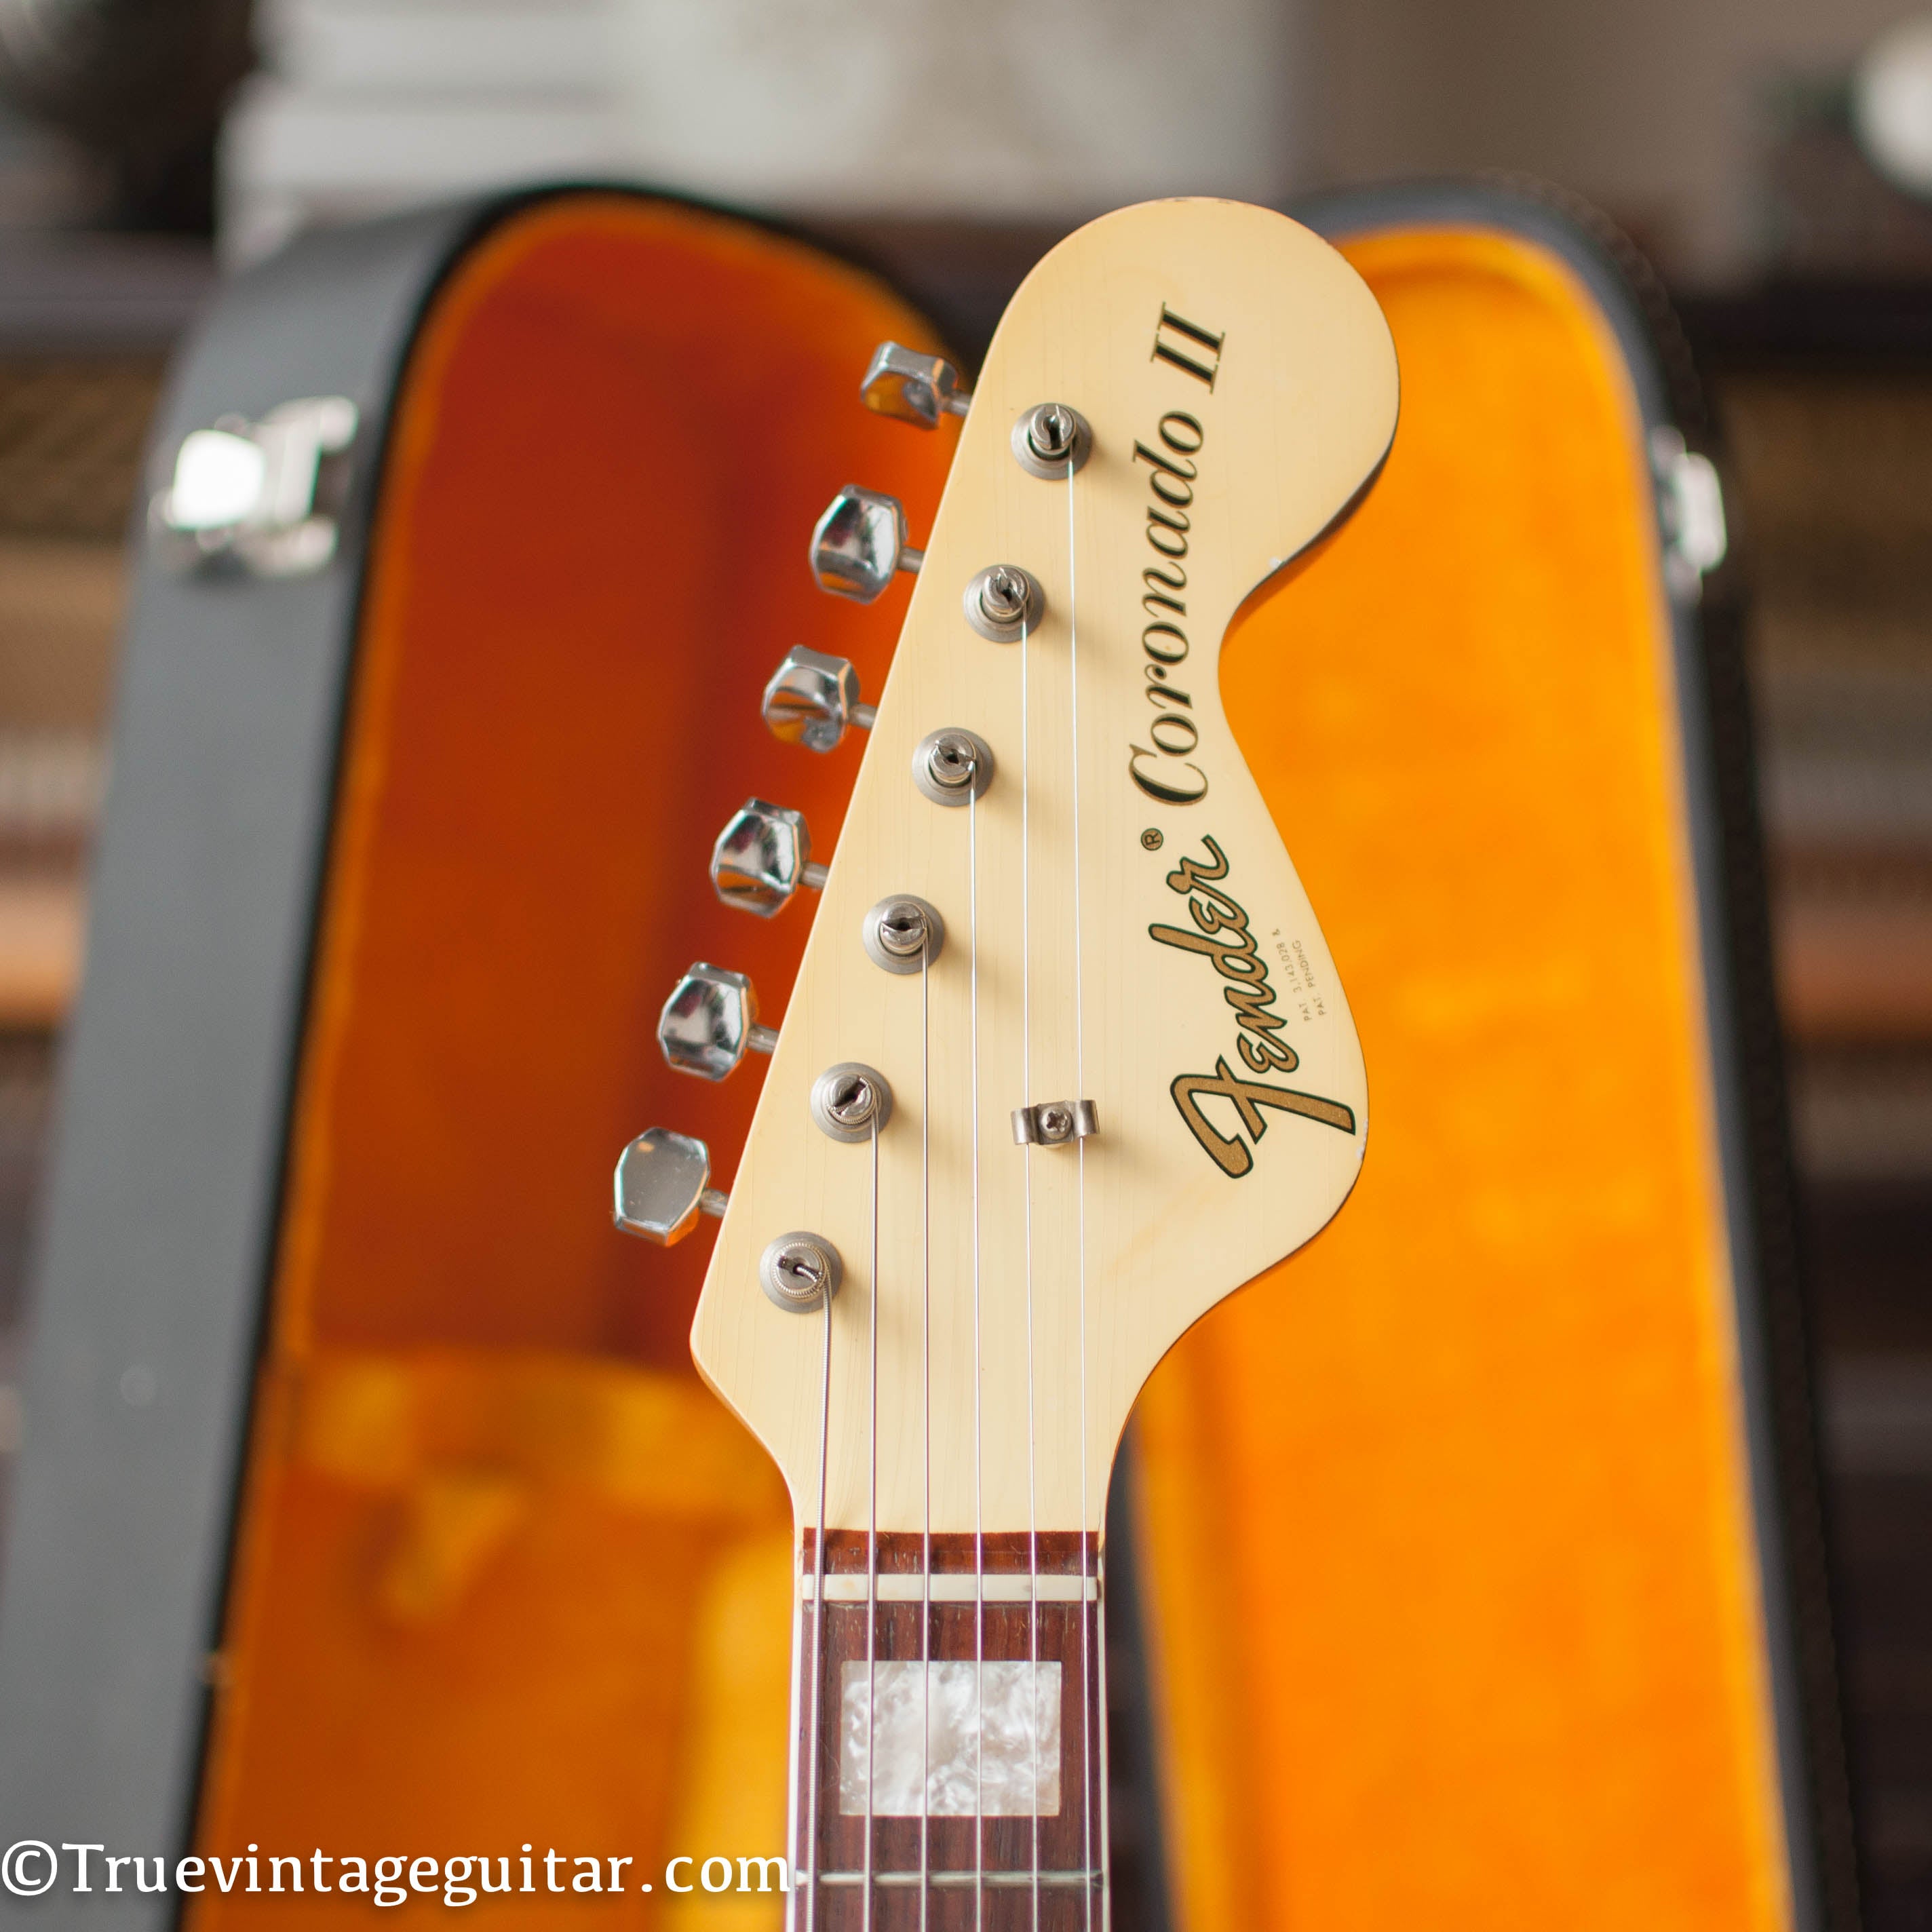 Matching headstock, vintage 1967 Fender Coronado II olympic white